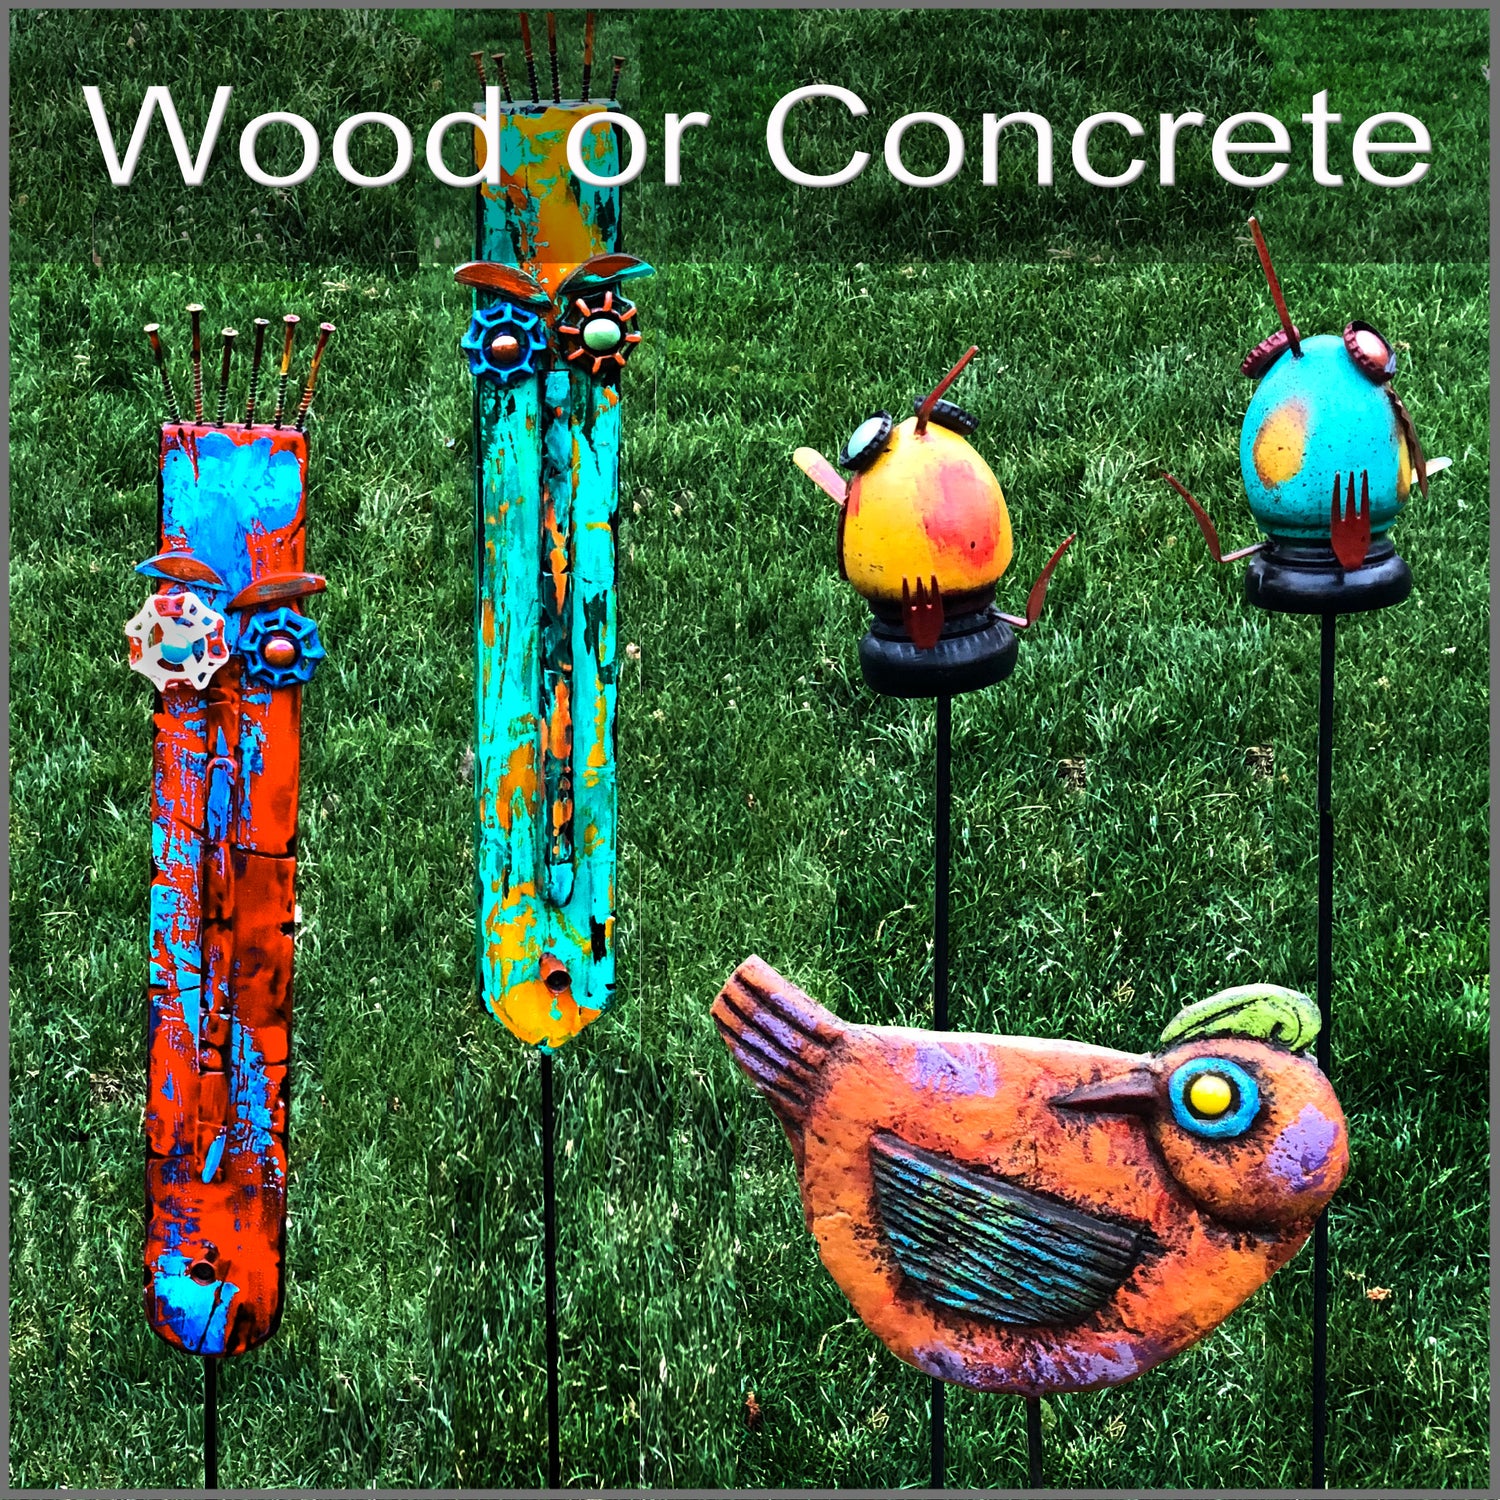 Garden Pokes - Concrete or Wood